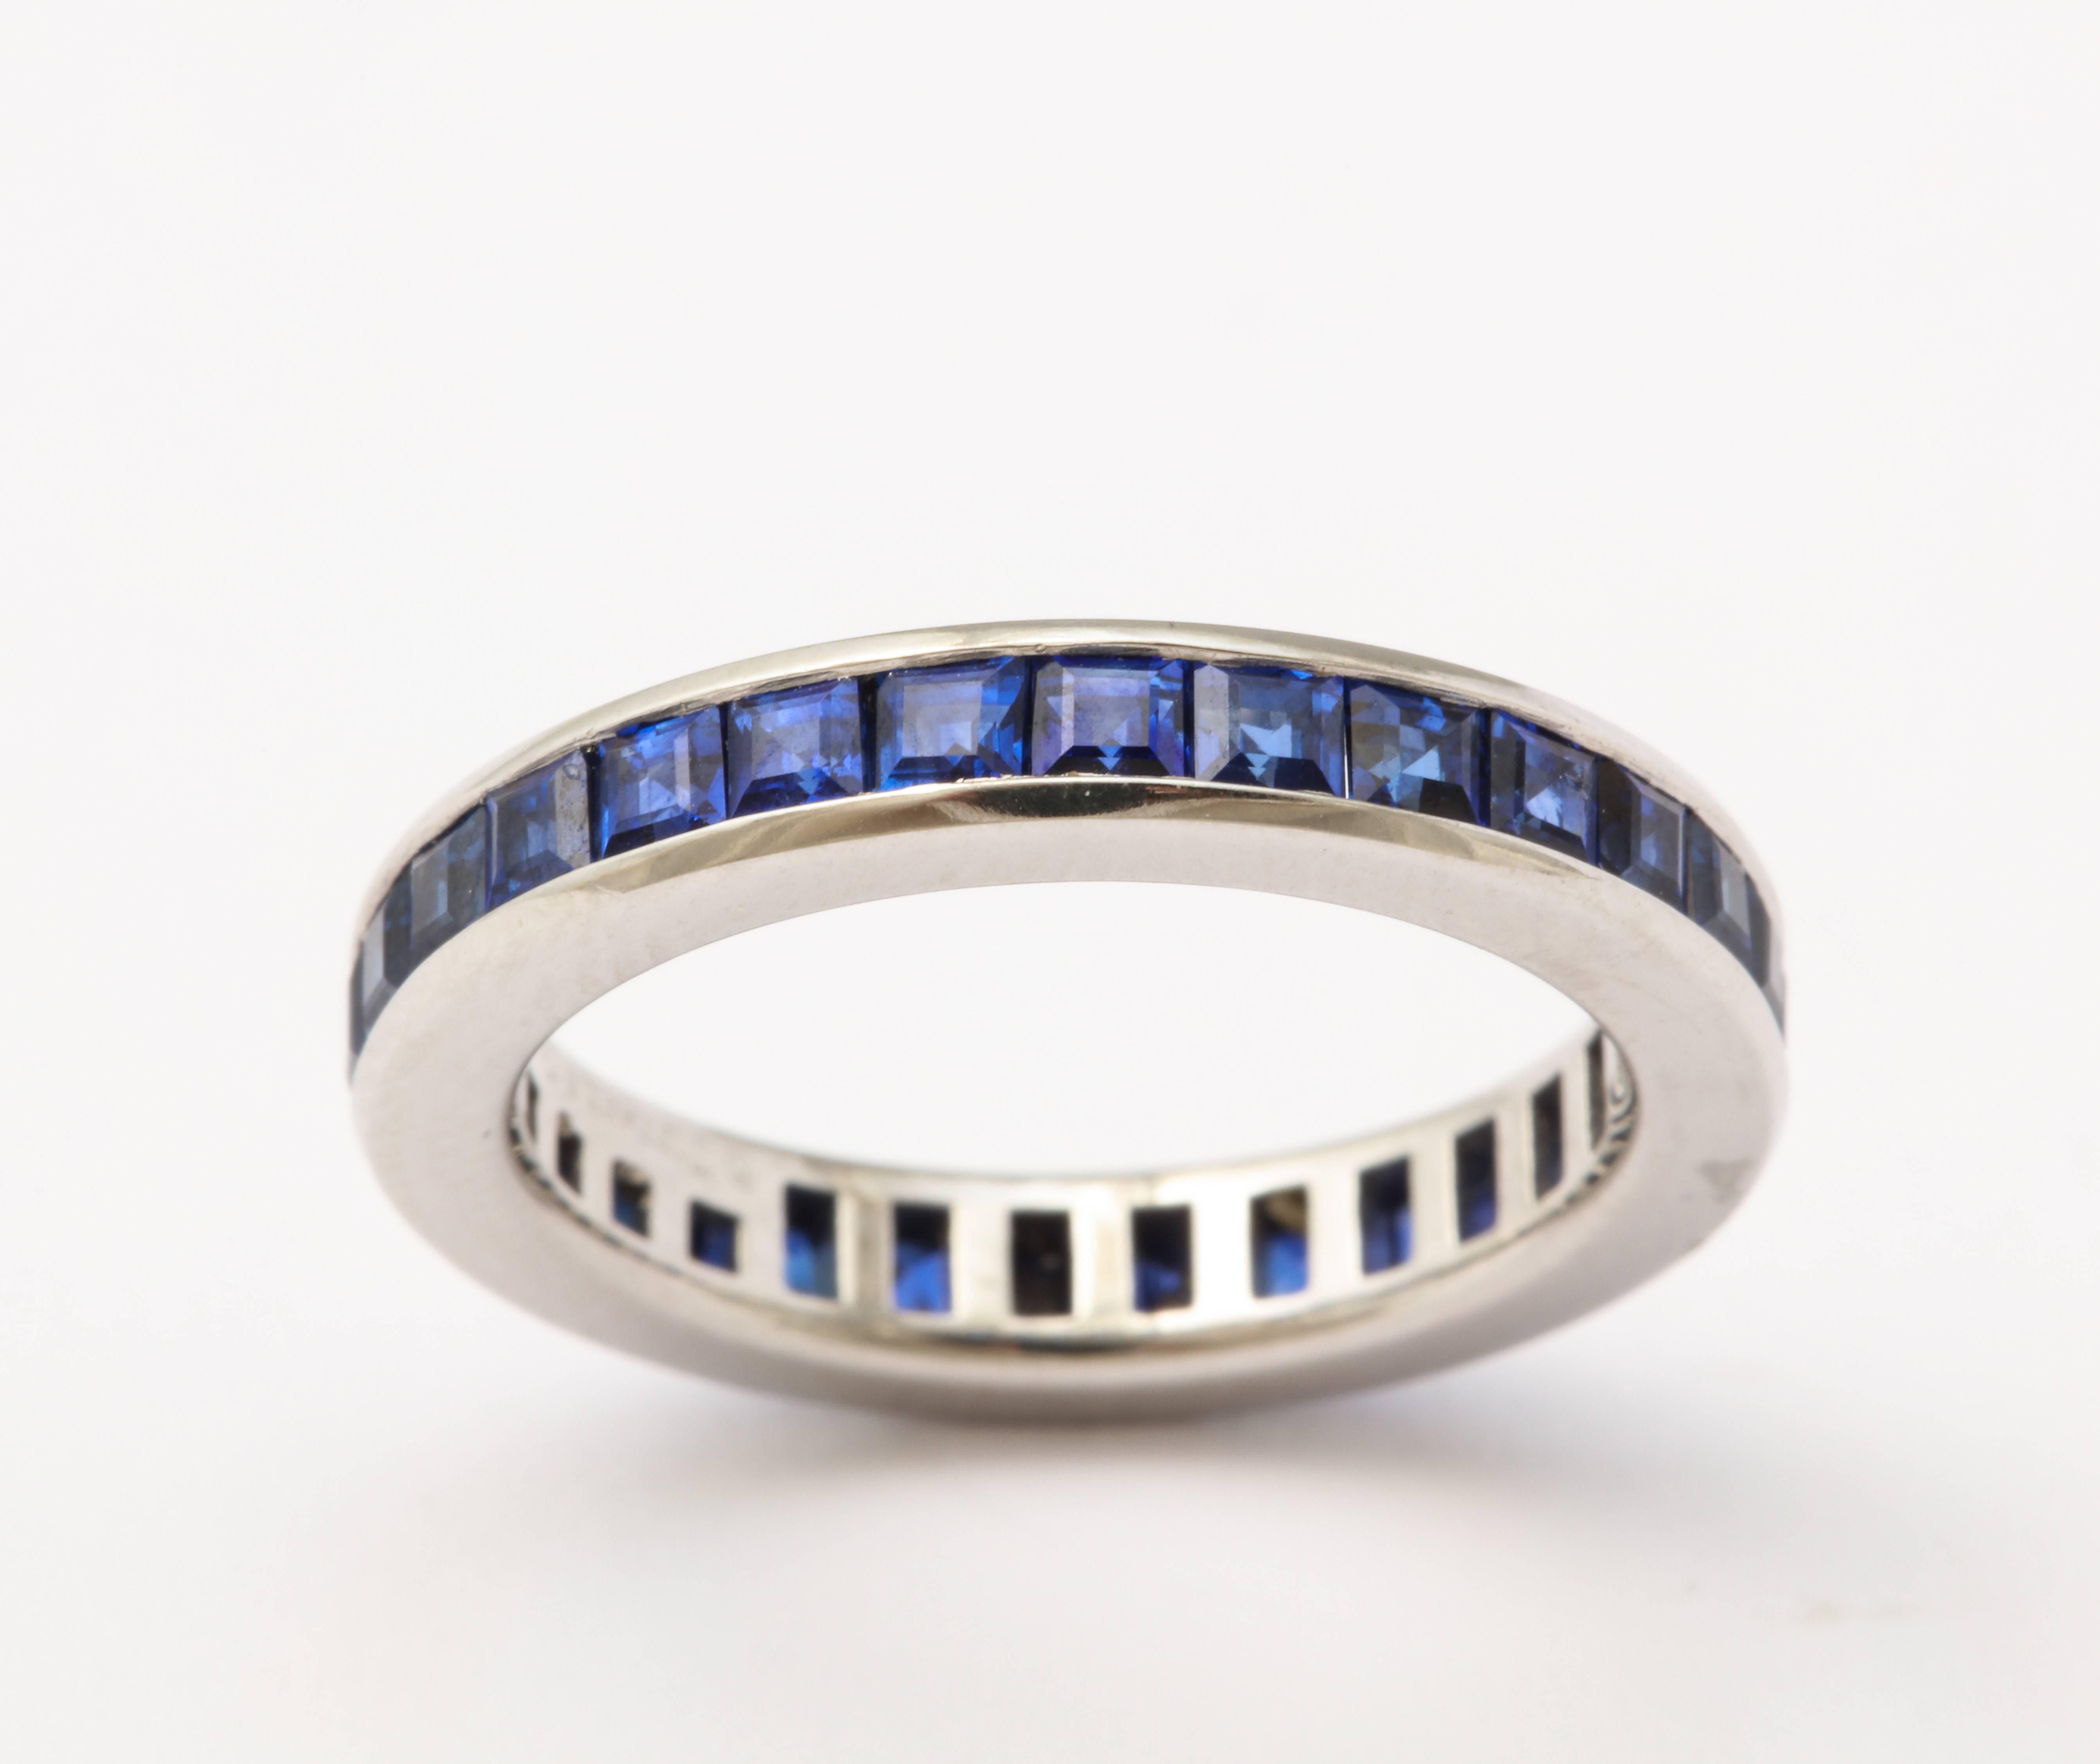 Art Deco Wedding Bands of Diamonds, Sapphires, Rubies and Emeralds Set in Platinum